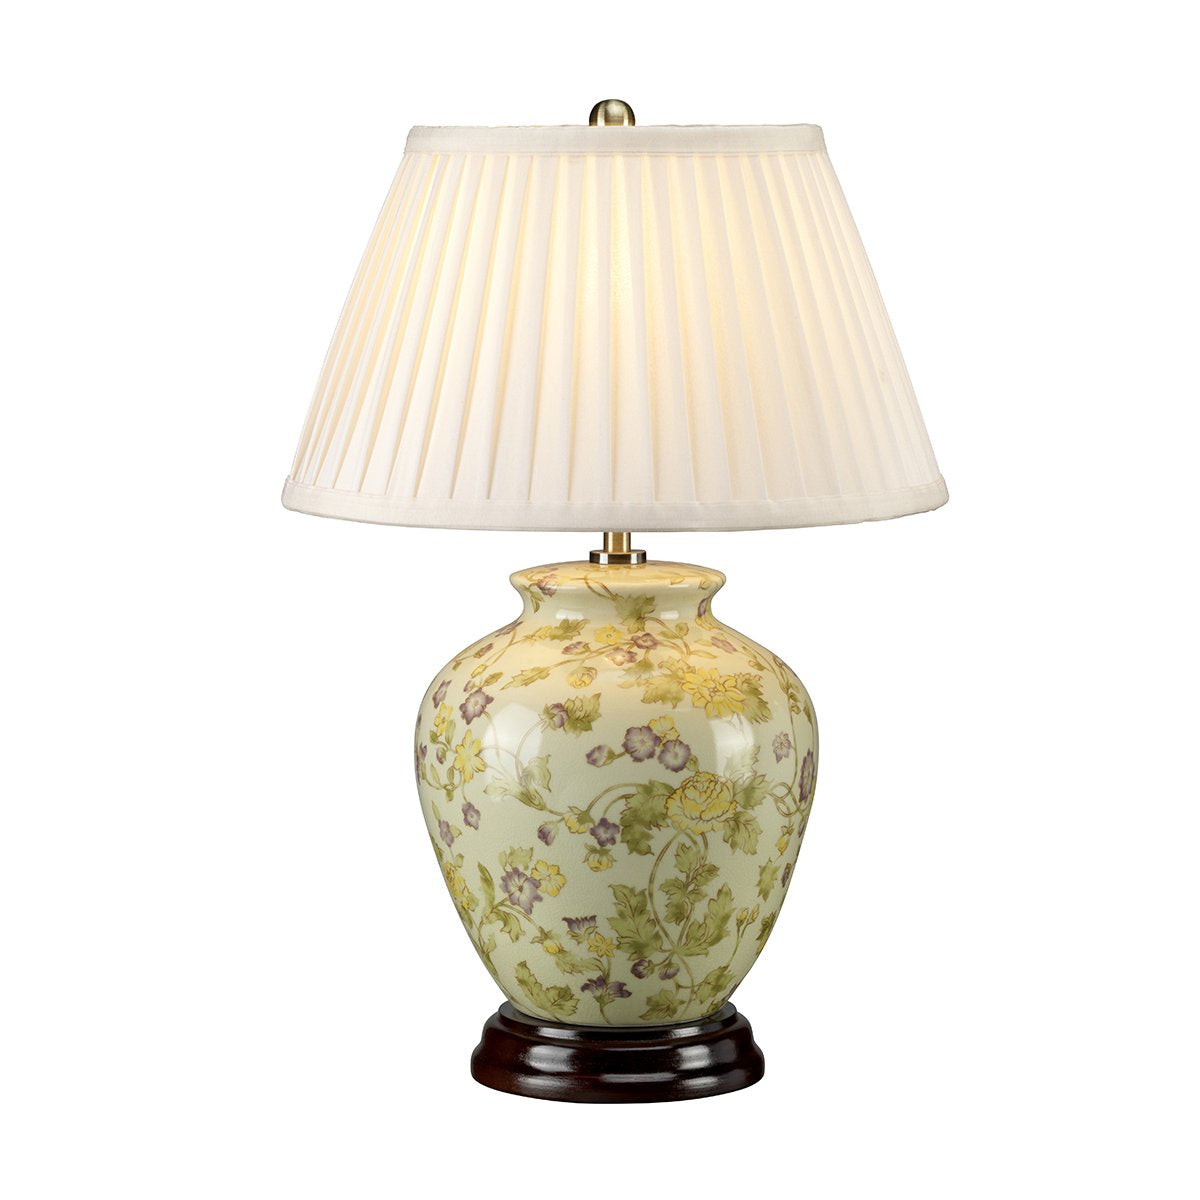 Sundridge Floral Table Lamp c/w Shade - ID 8463